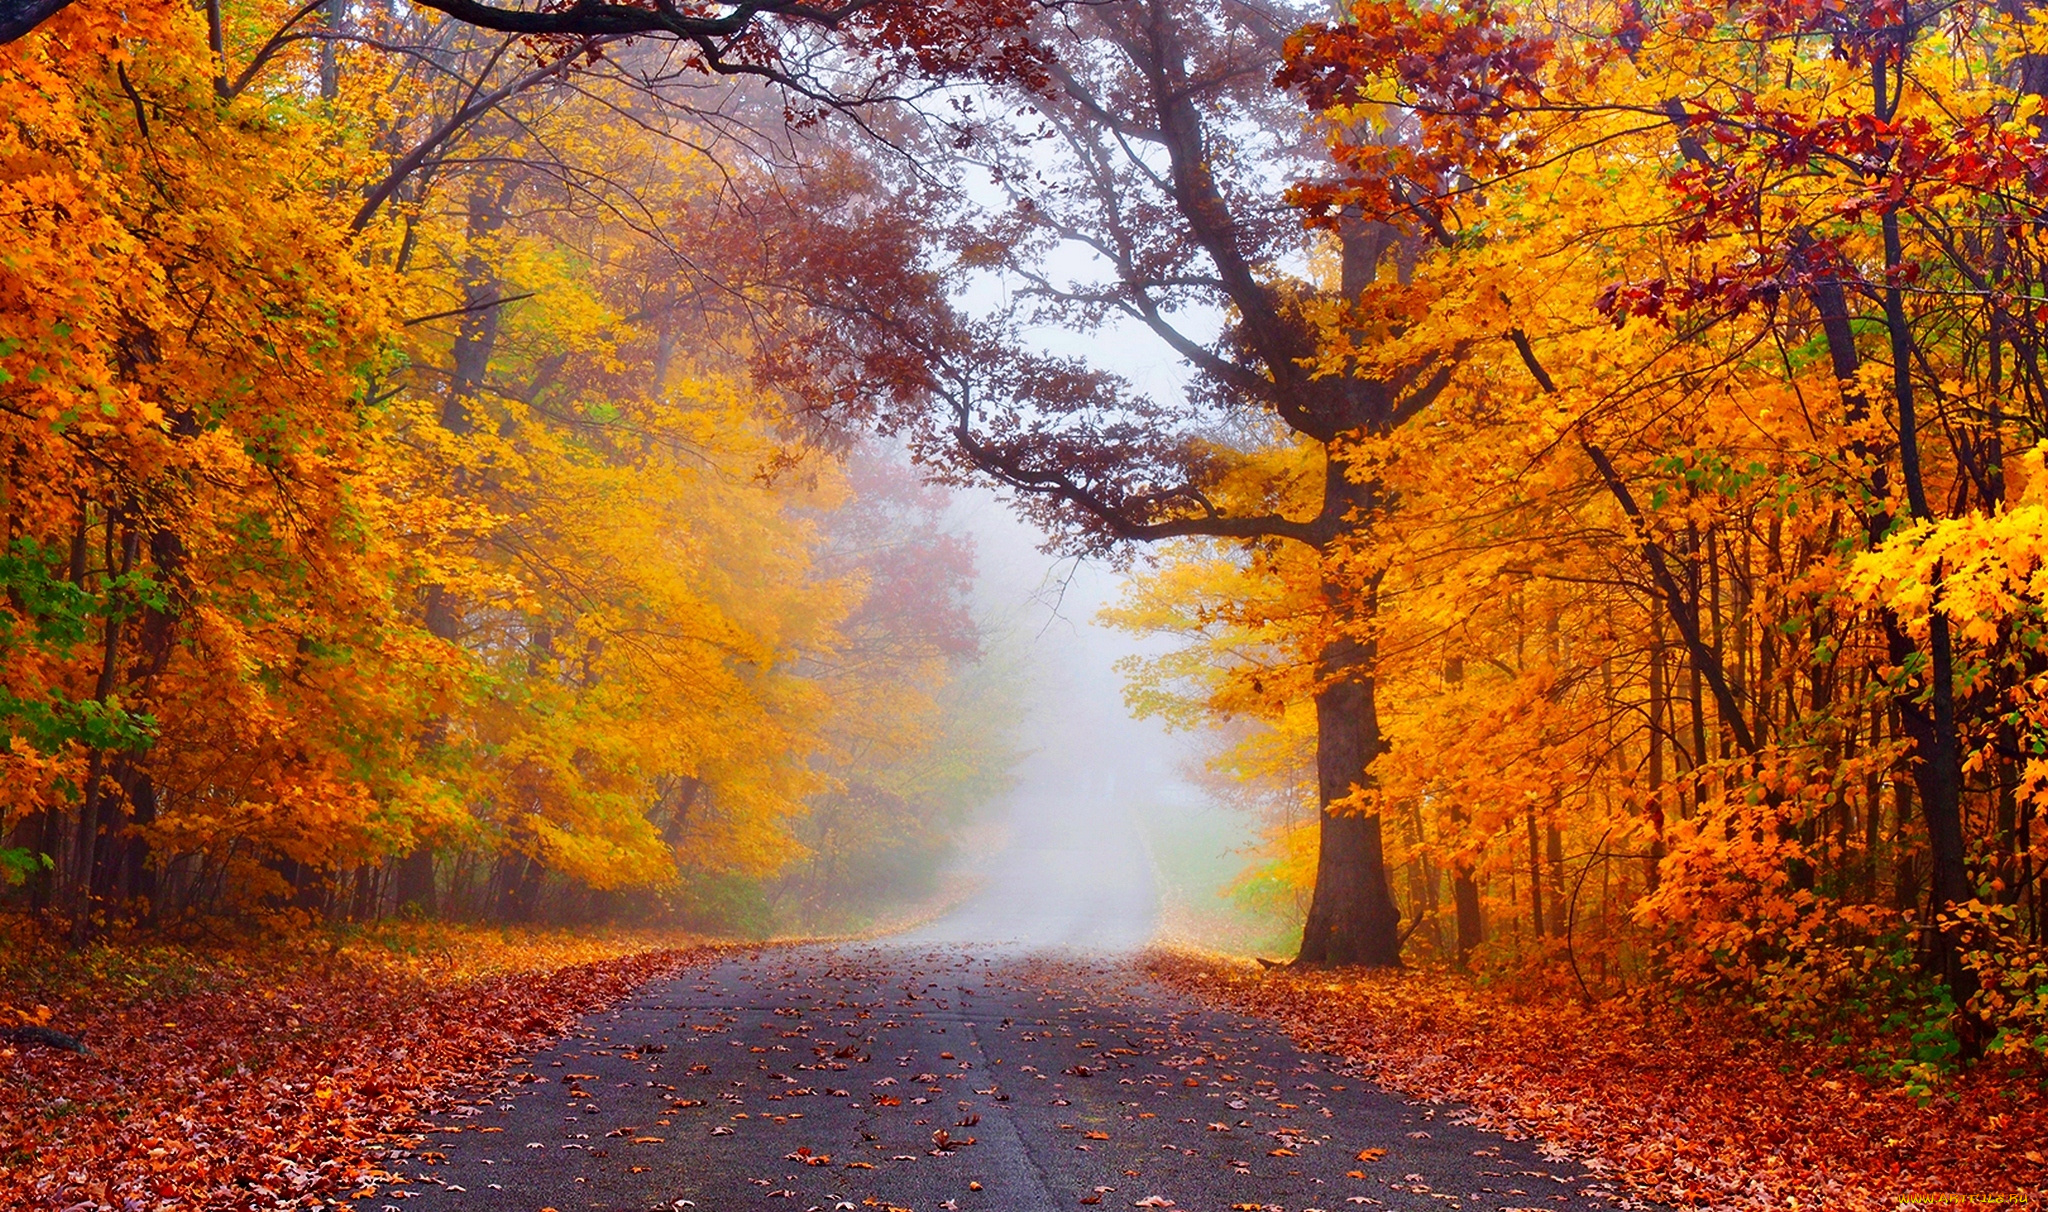 природа, дороги, nature, forest, park, trees, leaves, colorful, road, path, autumn, fall, colors, walk, листья, осень, деревья, дорога, лес, парк